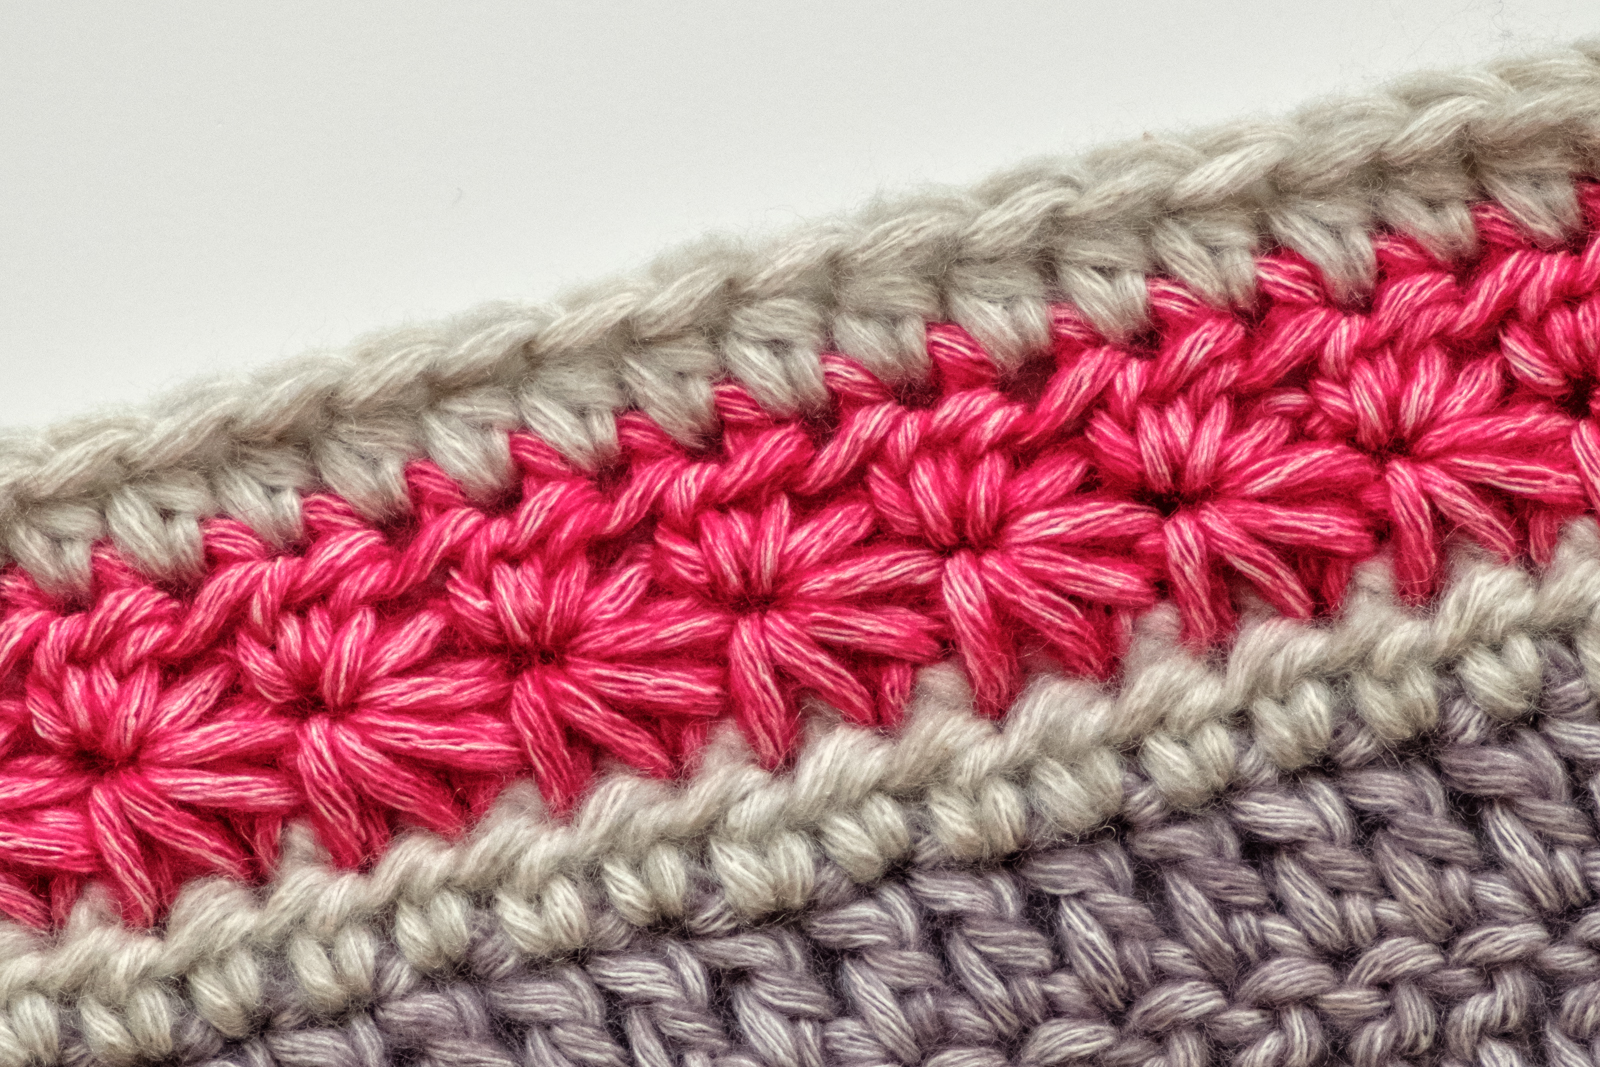 Star Stitch Crochet Patterns: Beautiful Star Stitch Crochet